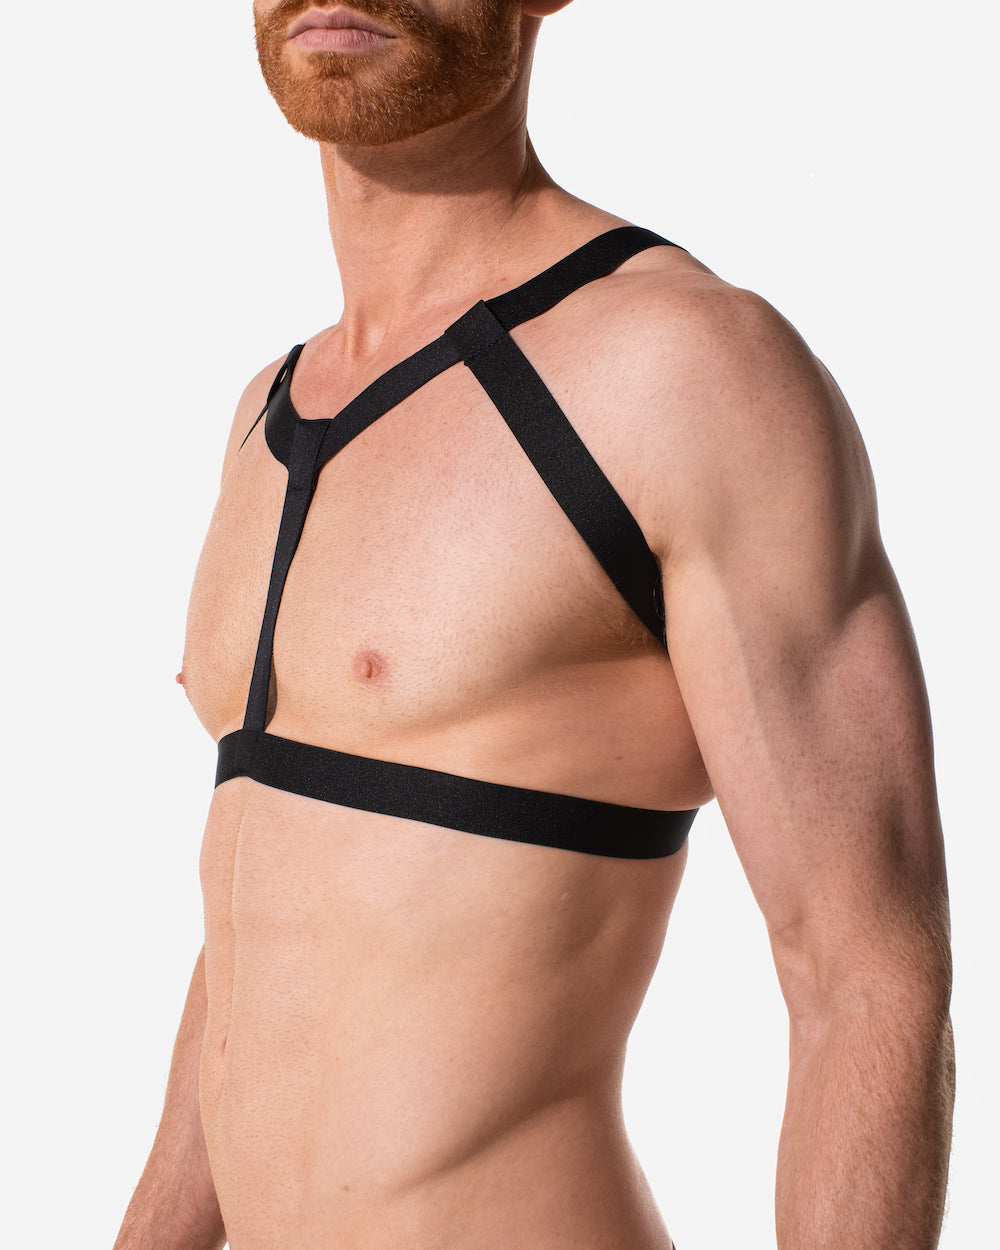 Trix Double Strap Harness